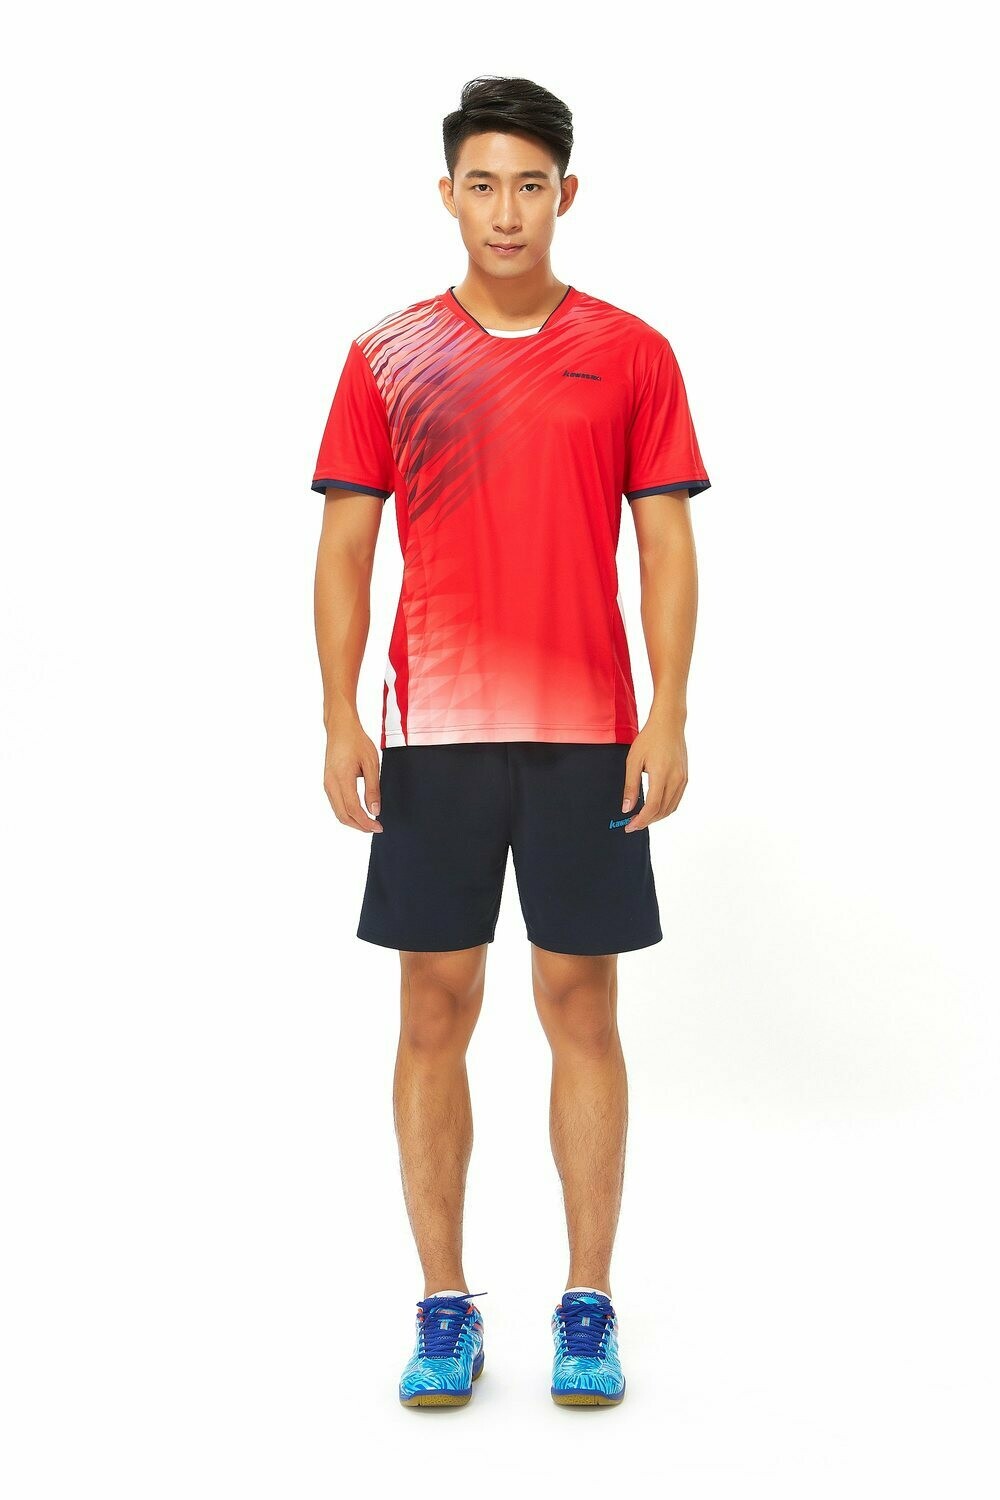 Kawasaki Men's Tournament Shirt - Red